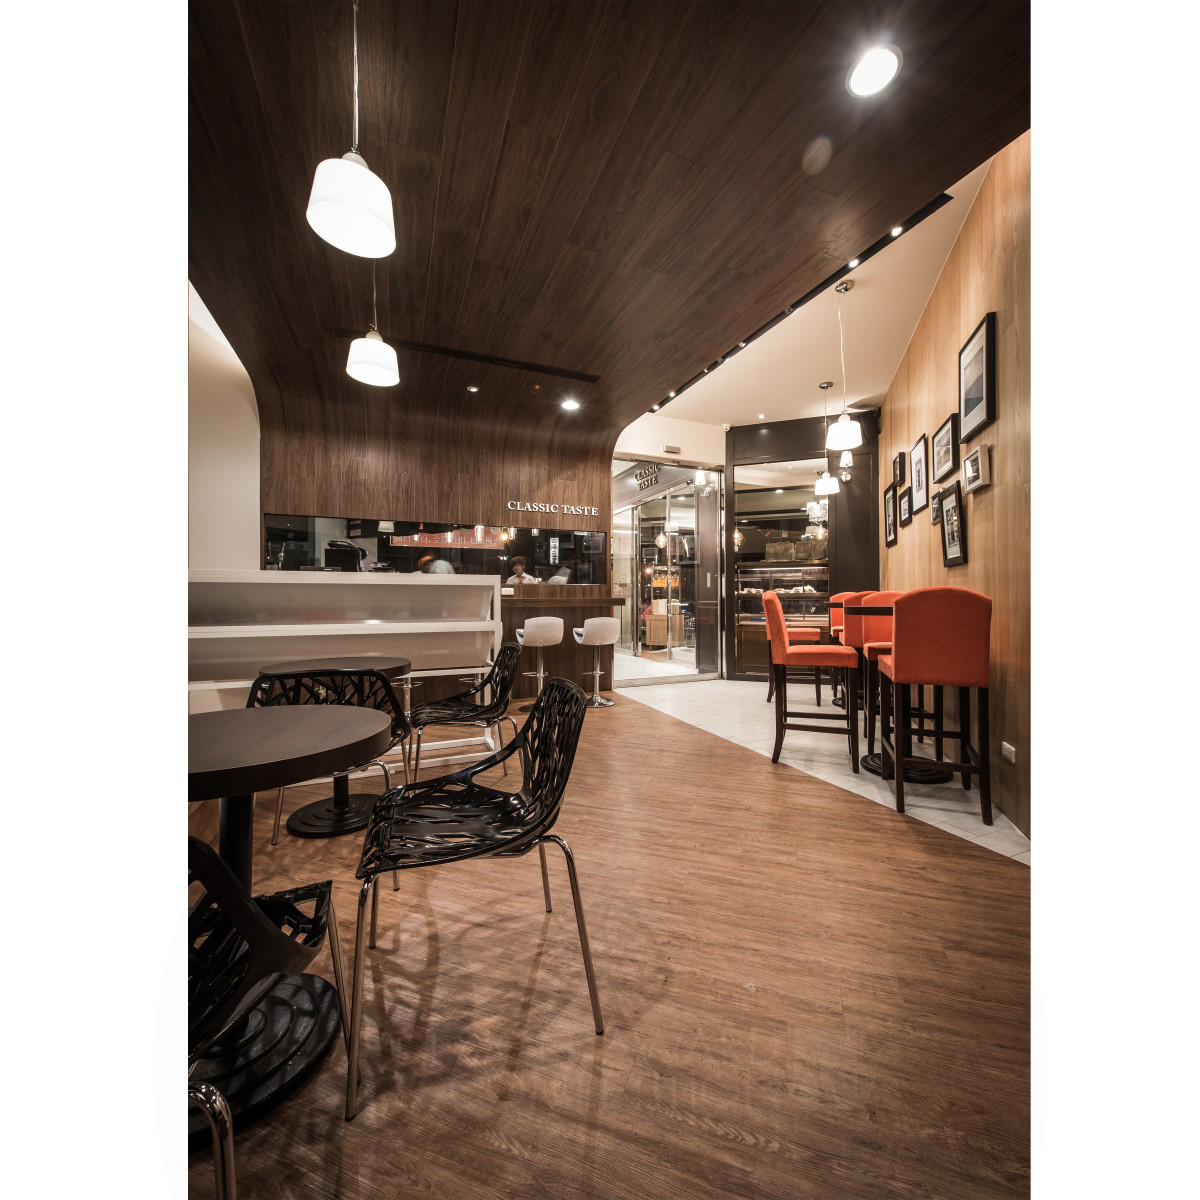 pleasure Restaurant by Yu Wen Chiu Silver Interior Space and Exhibition Design Award Winner 2014 